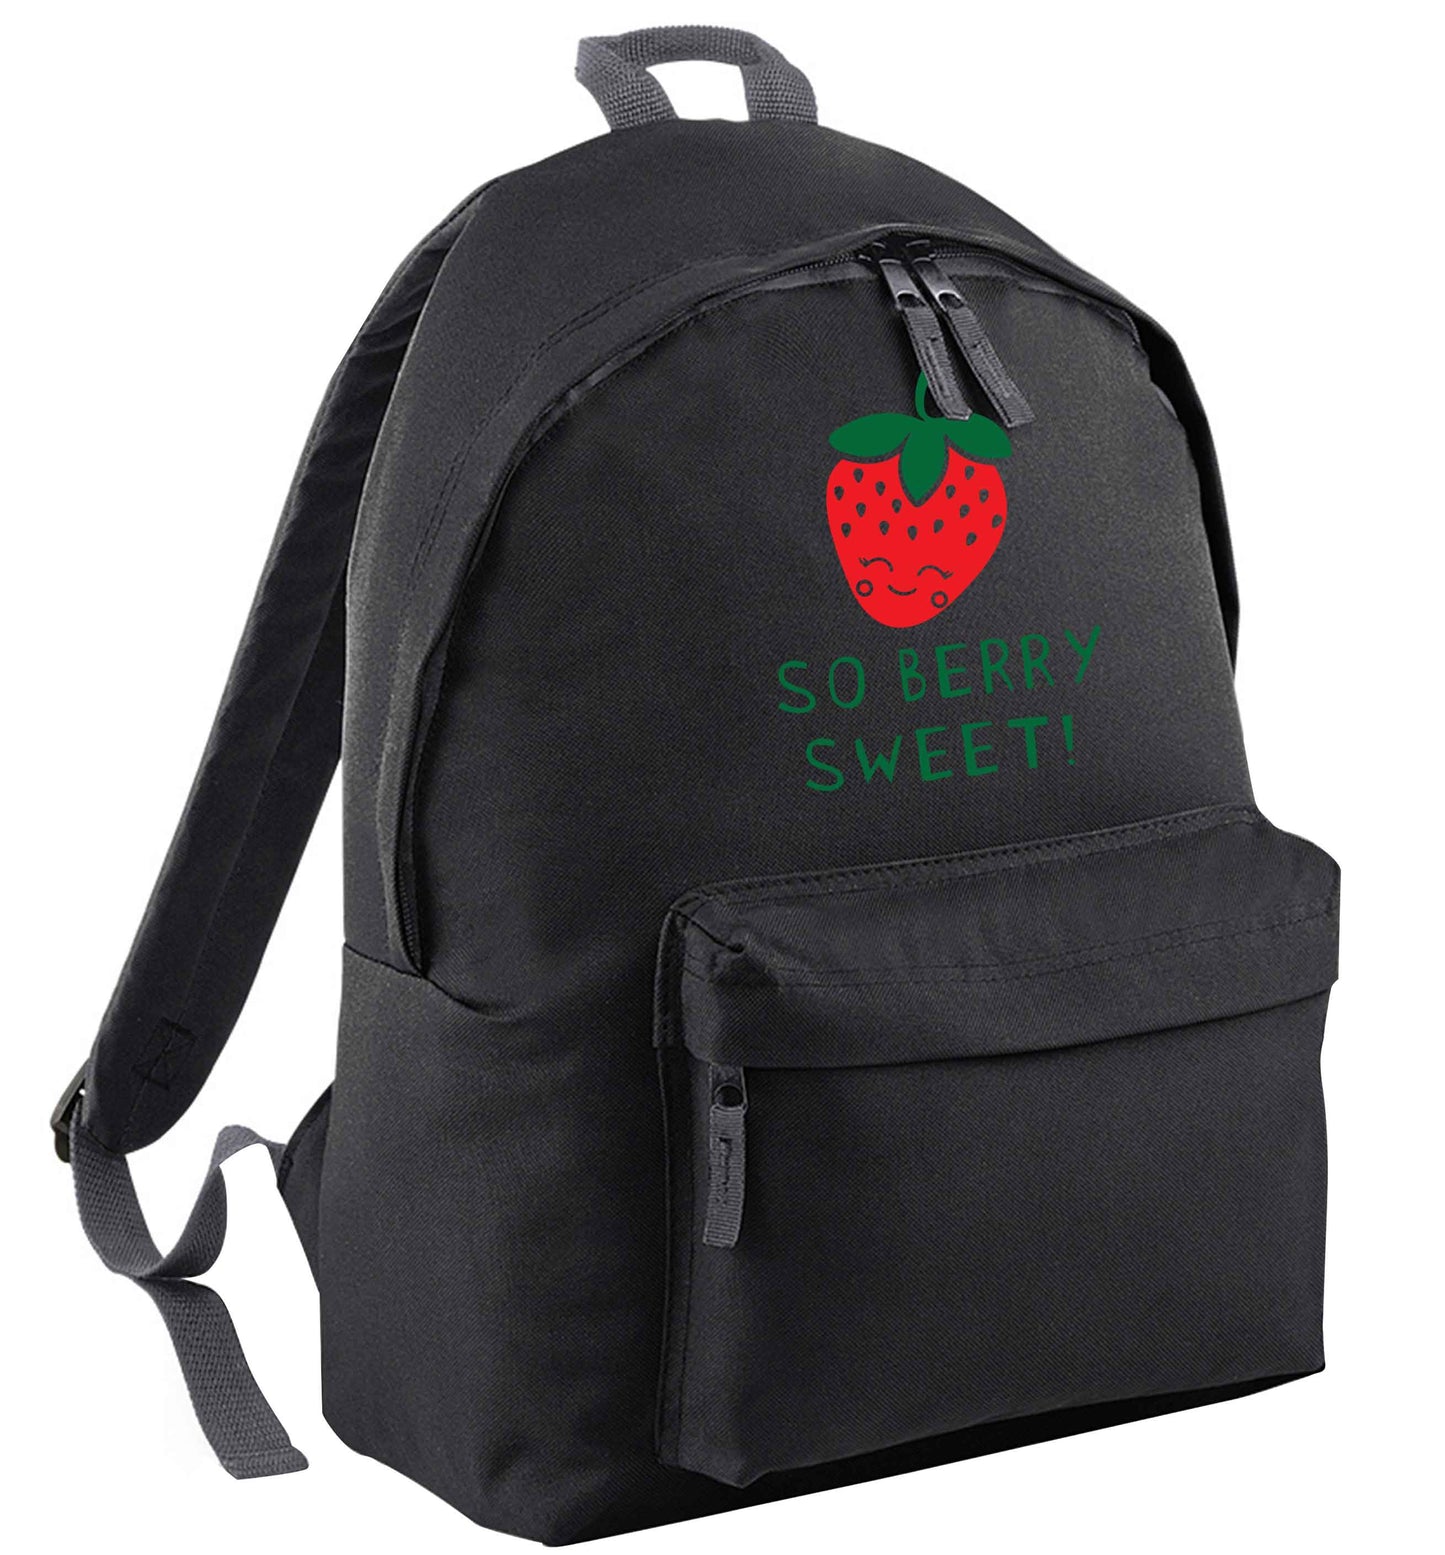 So berry sweet black adults backpack